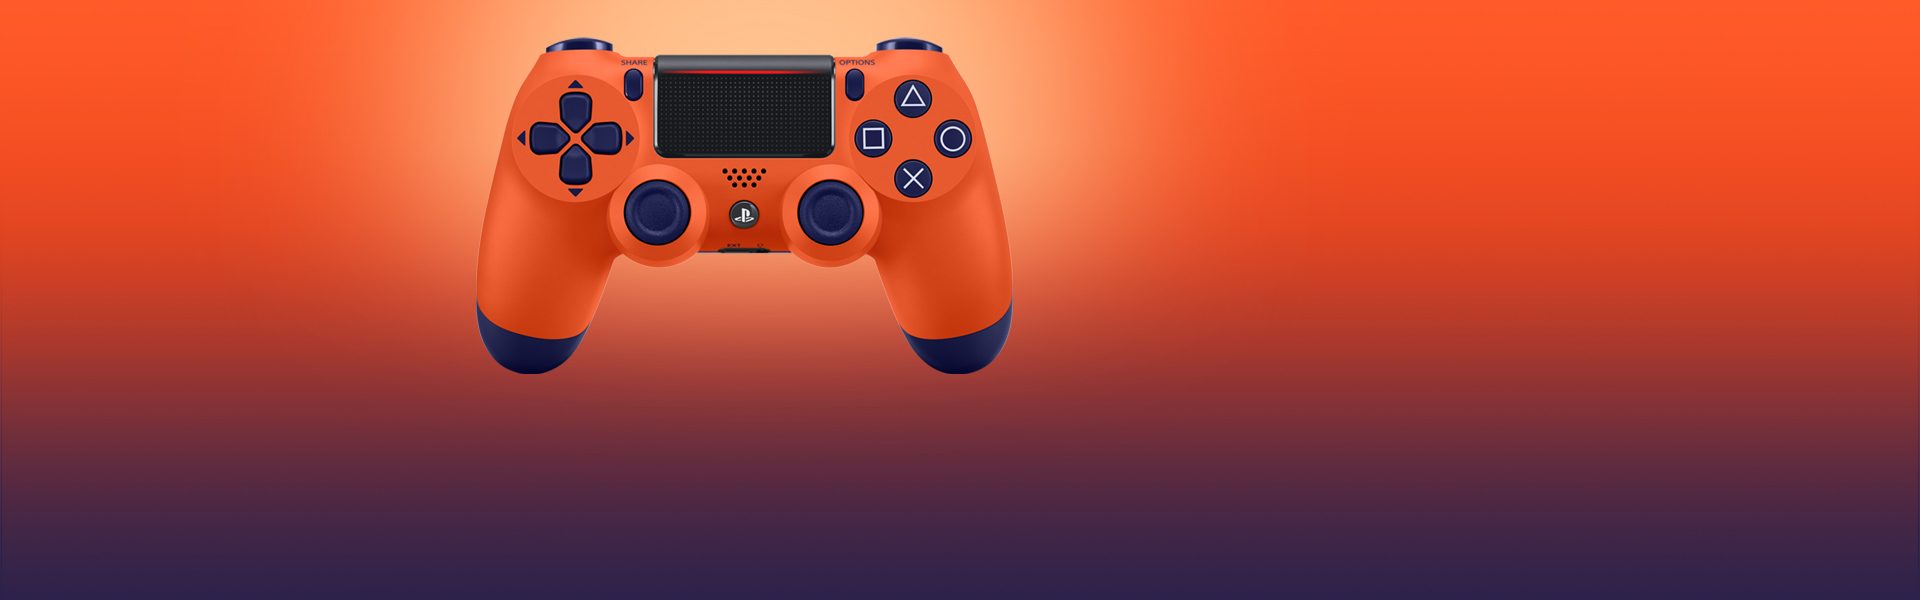 playstation 4 sunset orange controller